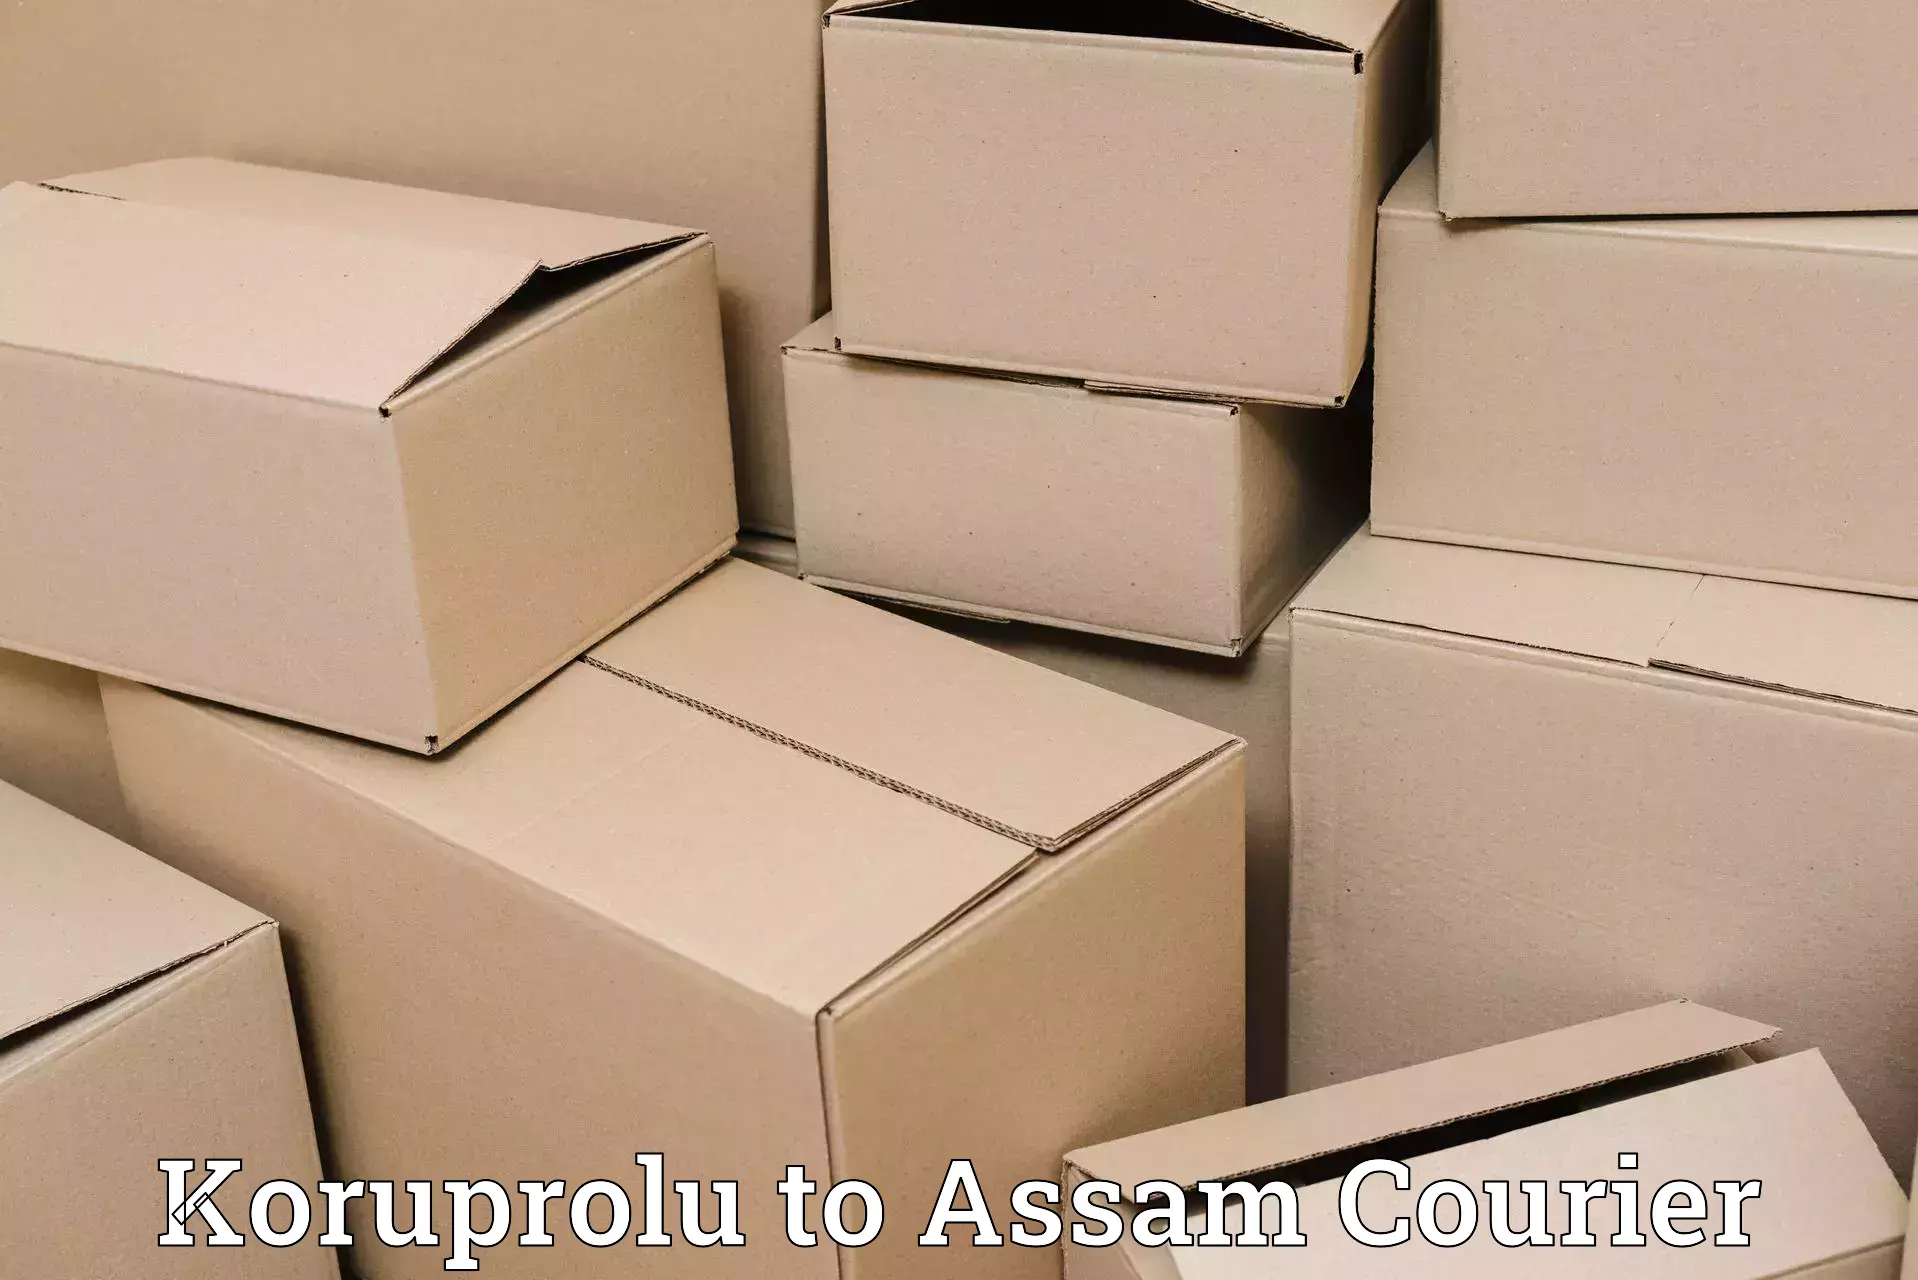 Advanced parcel tracking Koruprolu to Lala Assam